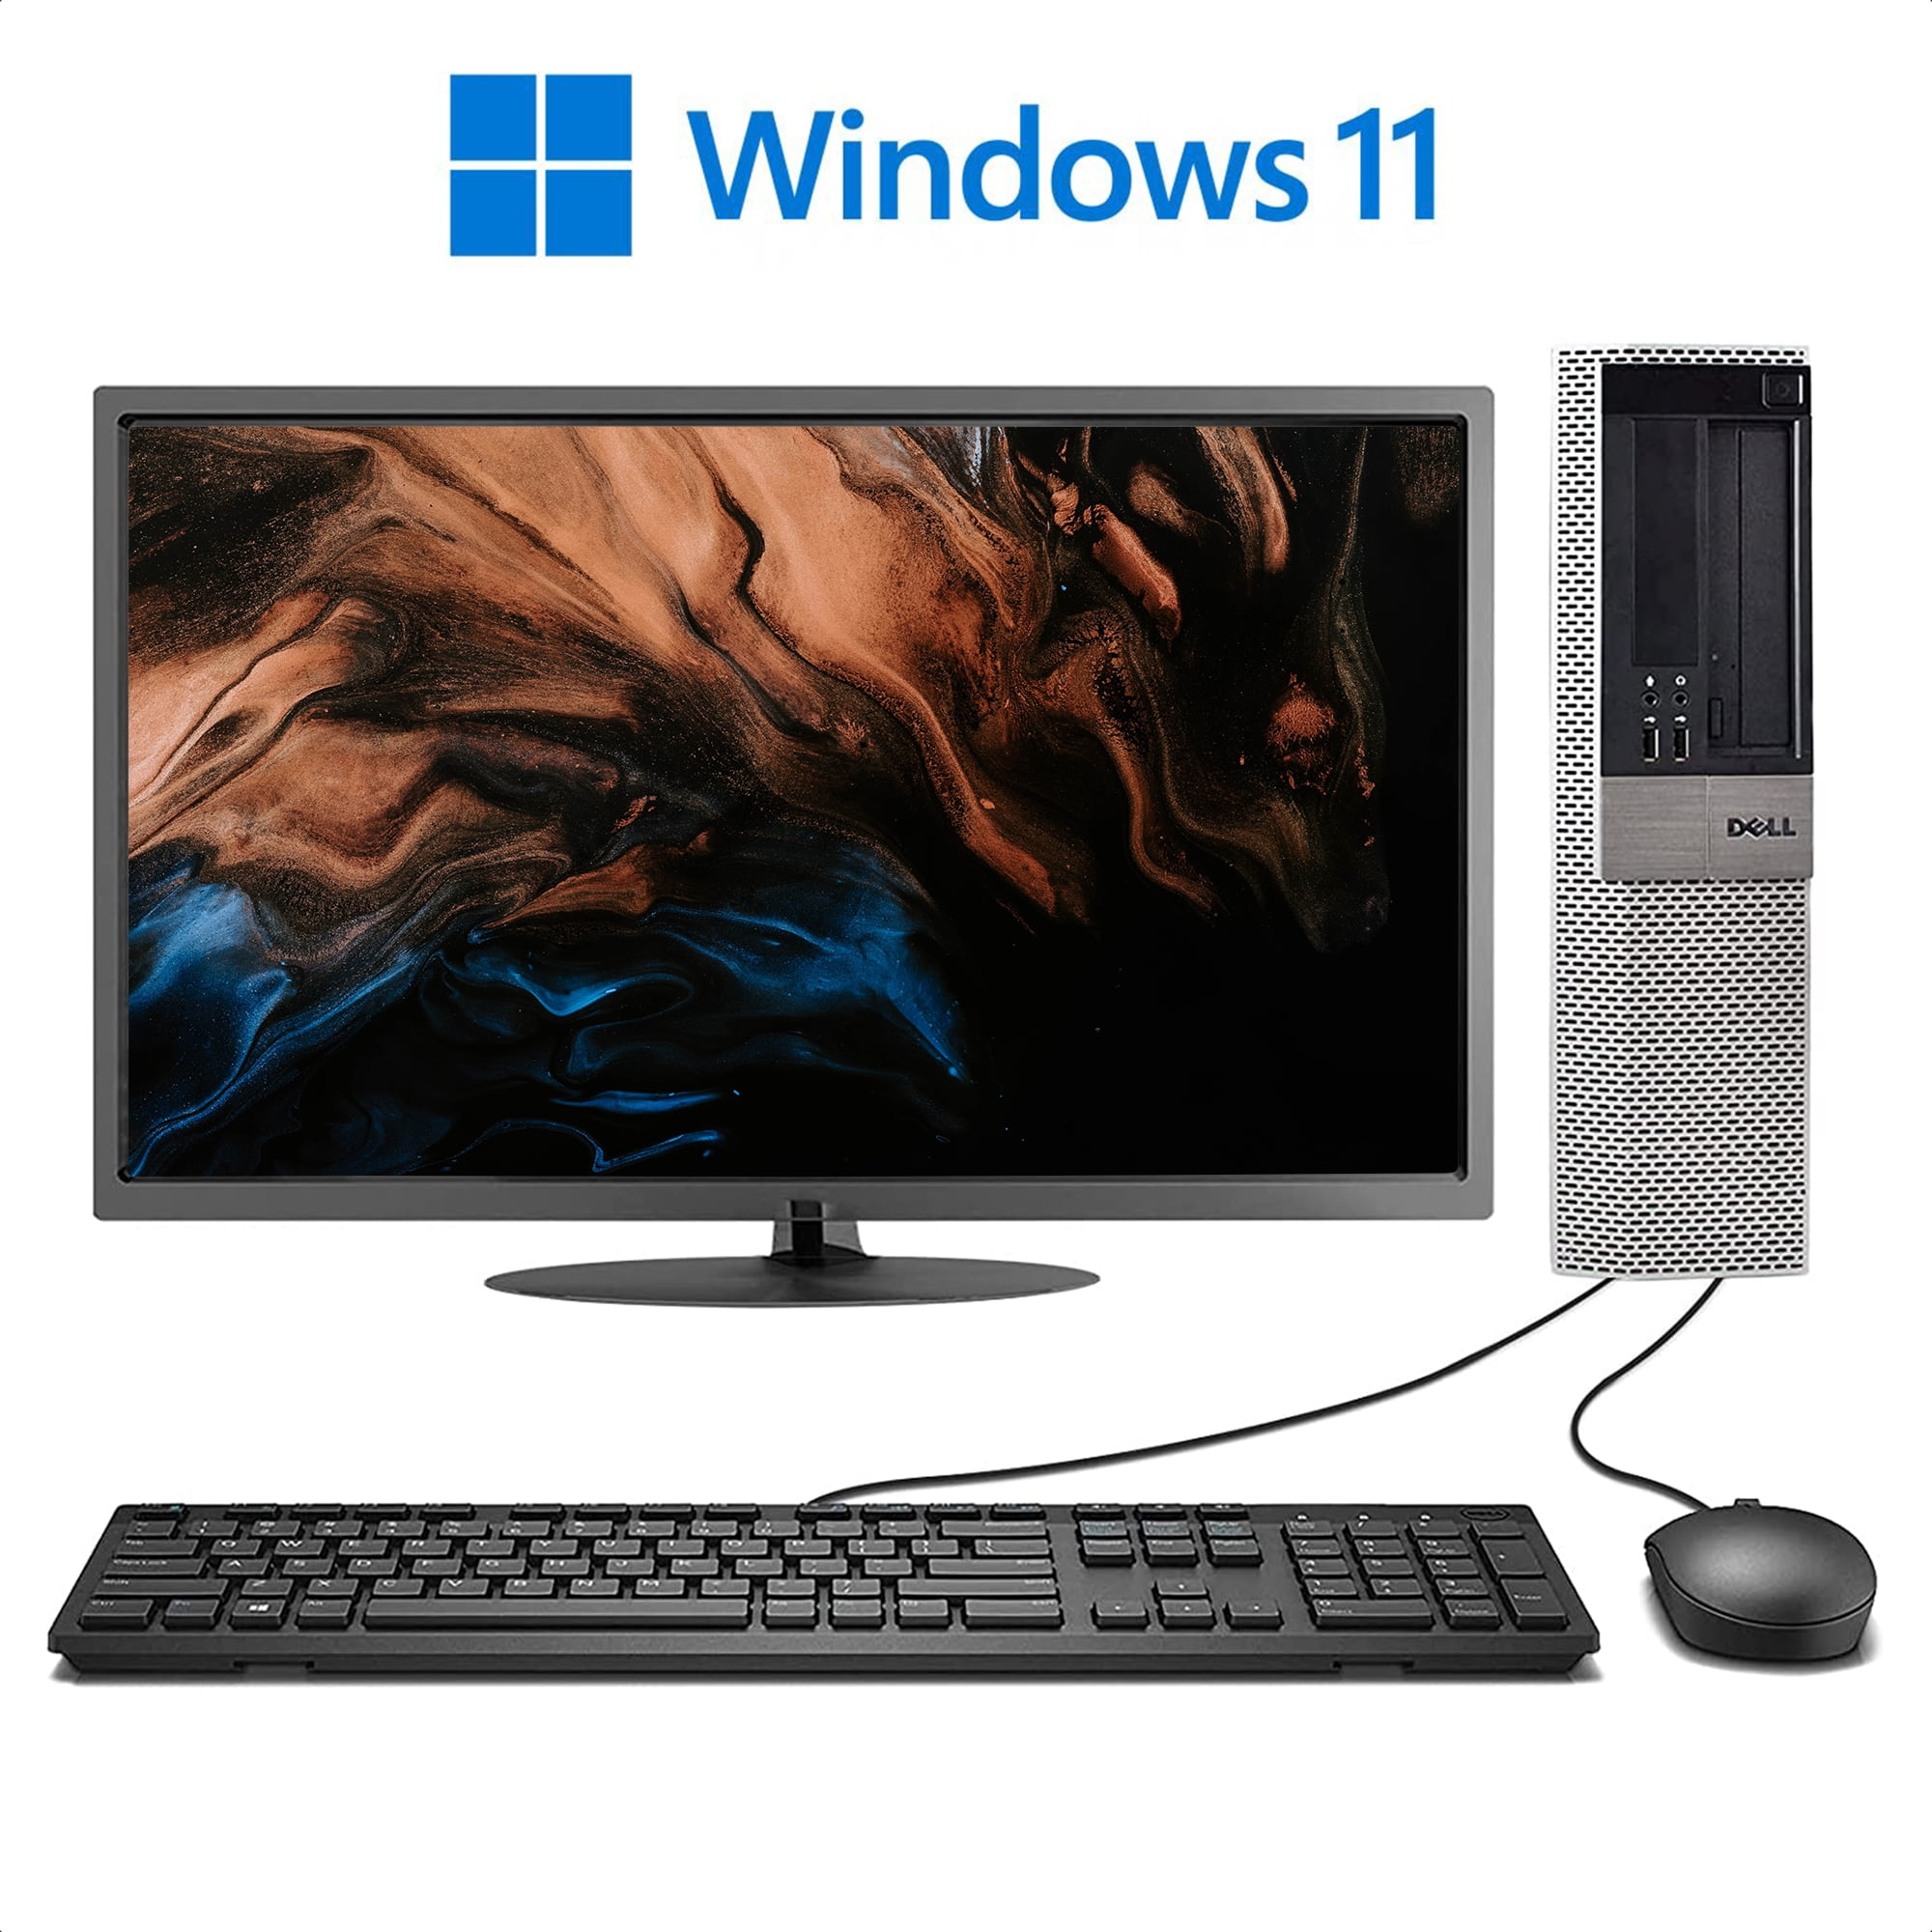 dell desktop with windows 11